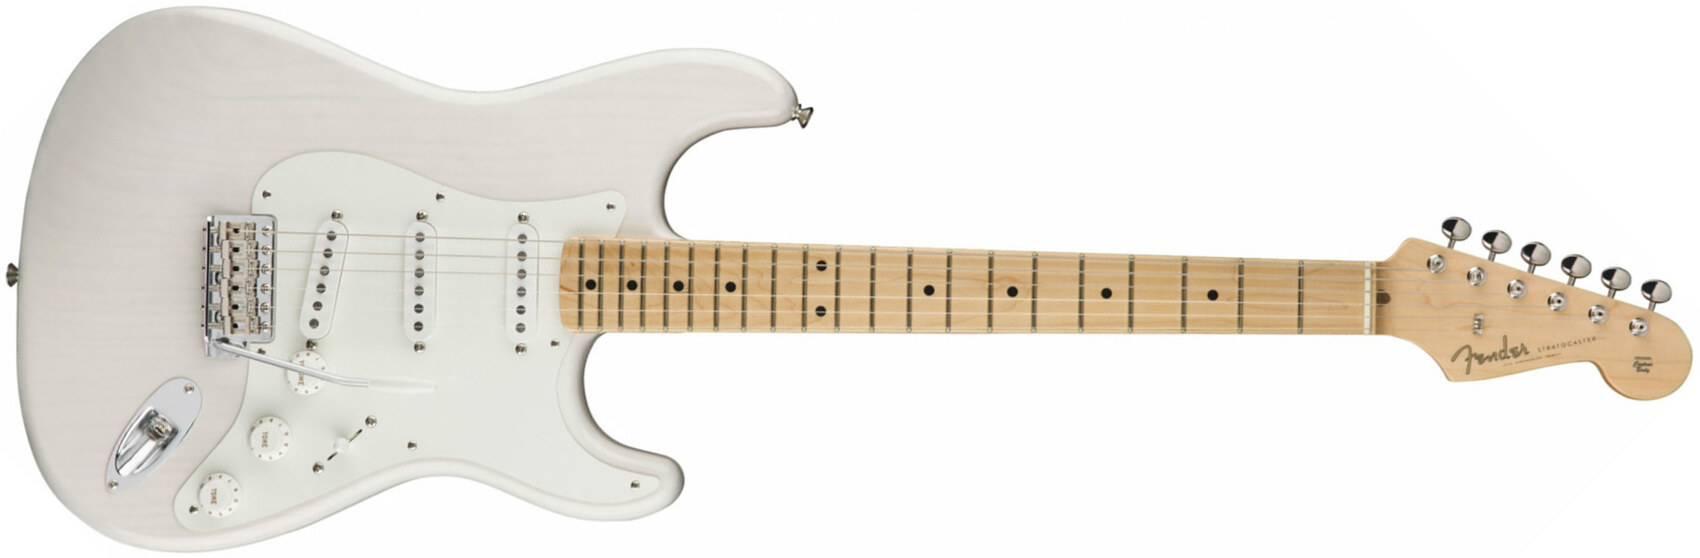 Fender Strat '50s American Original Usa Sss Mn - White Blonde - Guitare Électrique Forme Str - Main picture